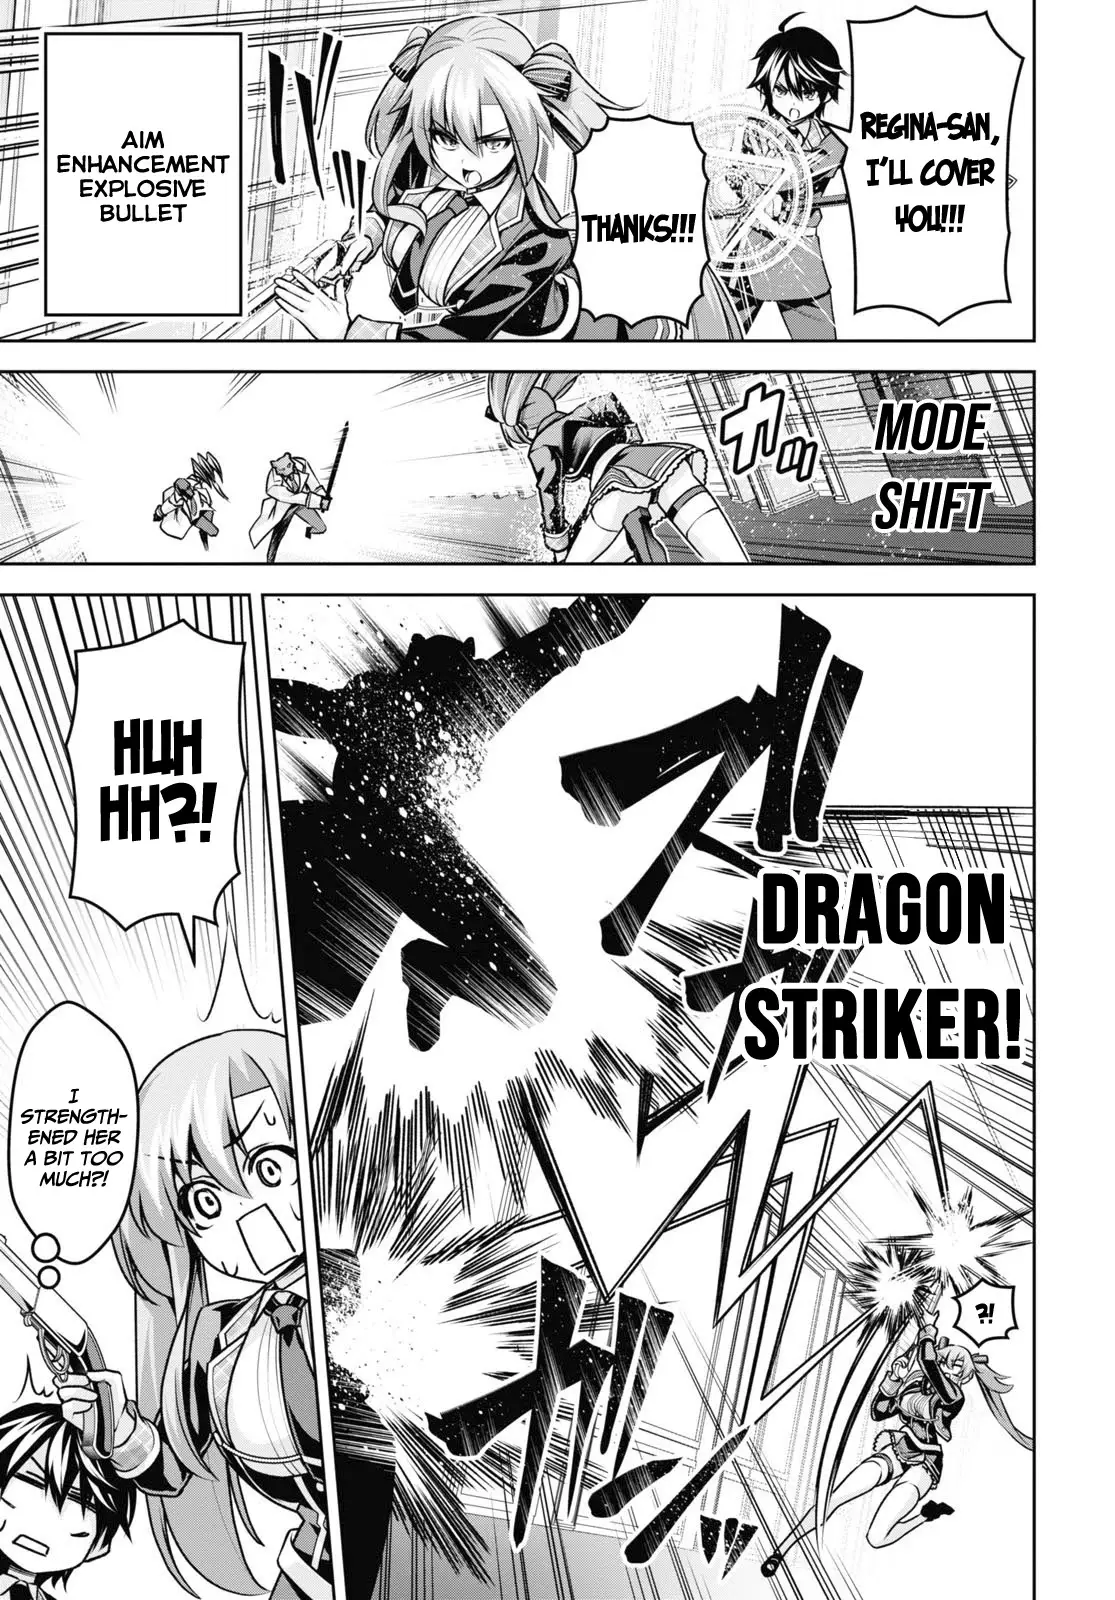 Demon's Sword Master Of Excalibur School - 18 page 27-97db954c